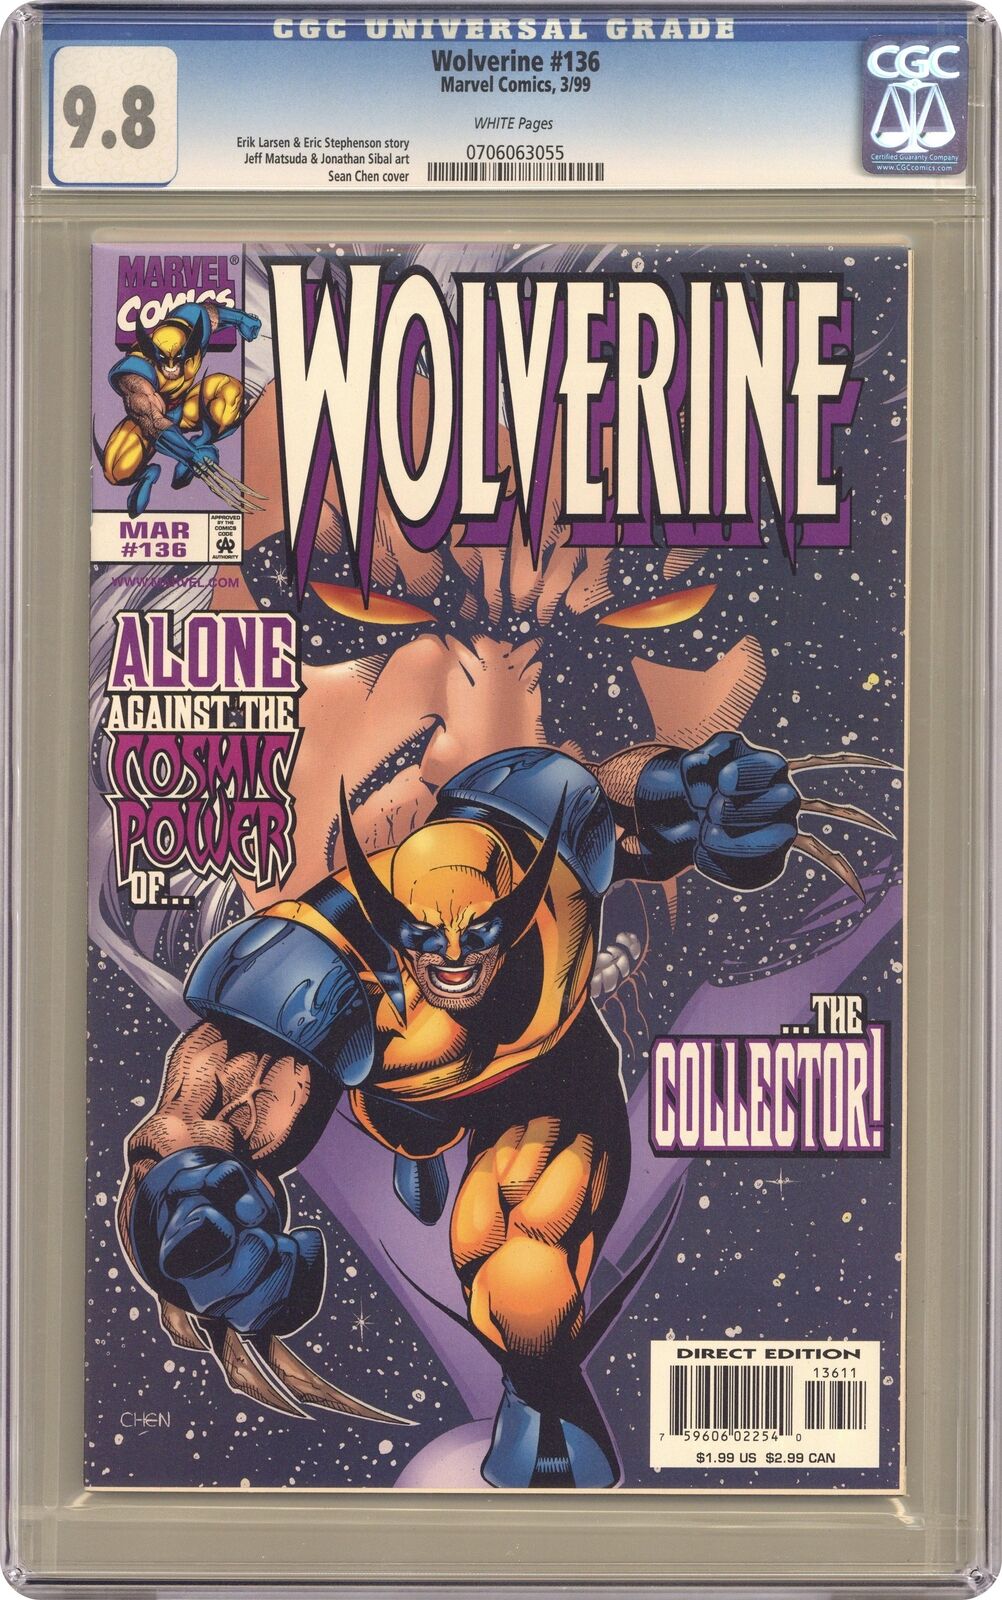 Wolverine #136 CGC 9.8 1999 0706063055